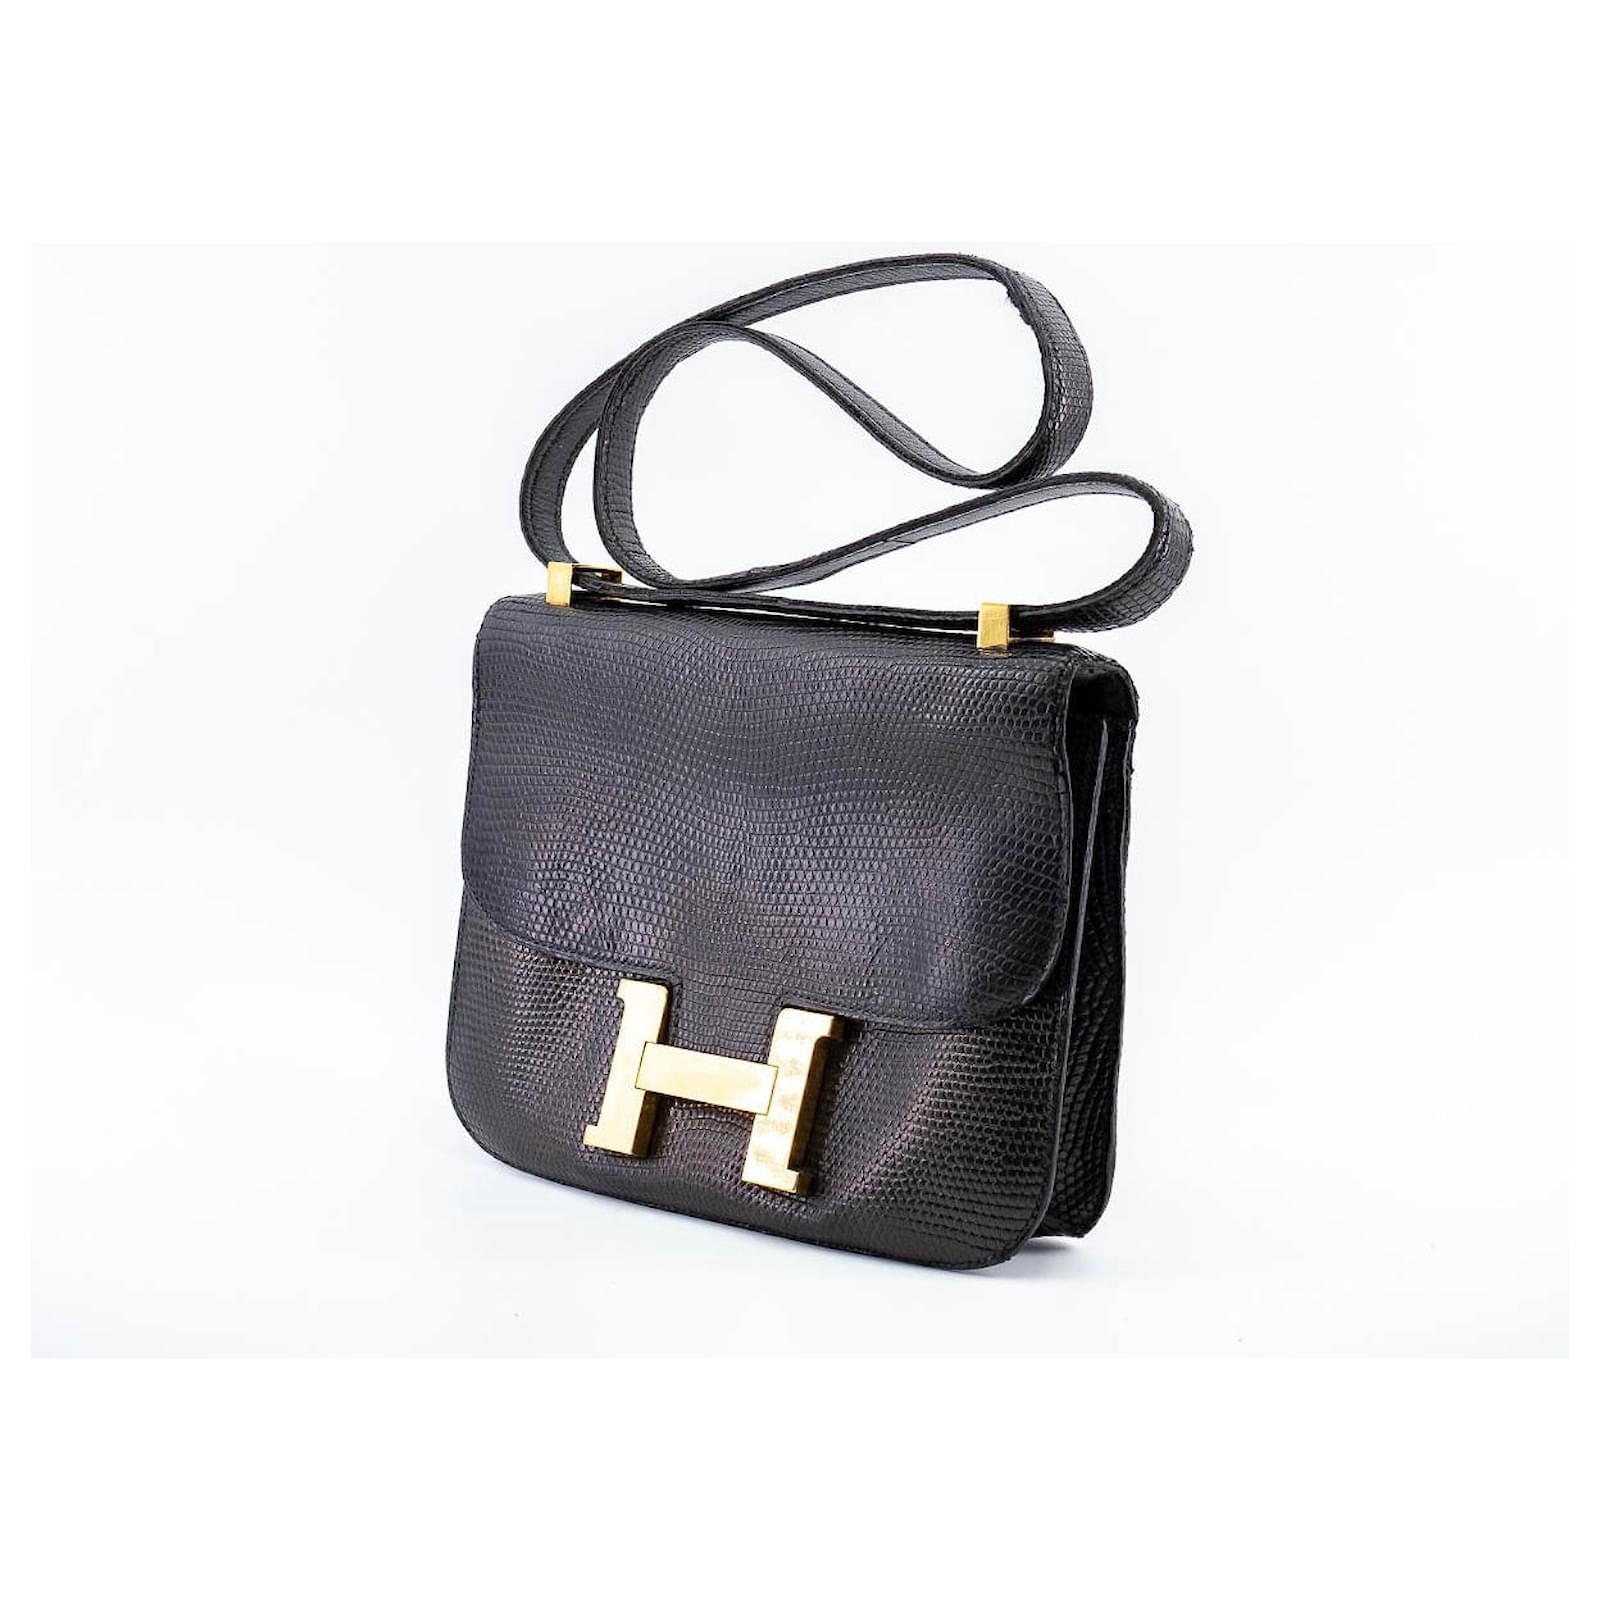 Hermès Constance vintage bag in black lizard